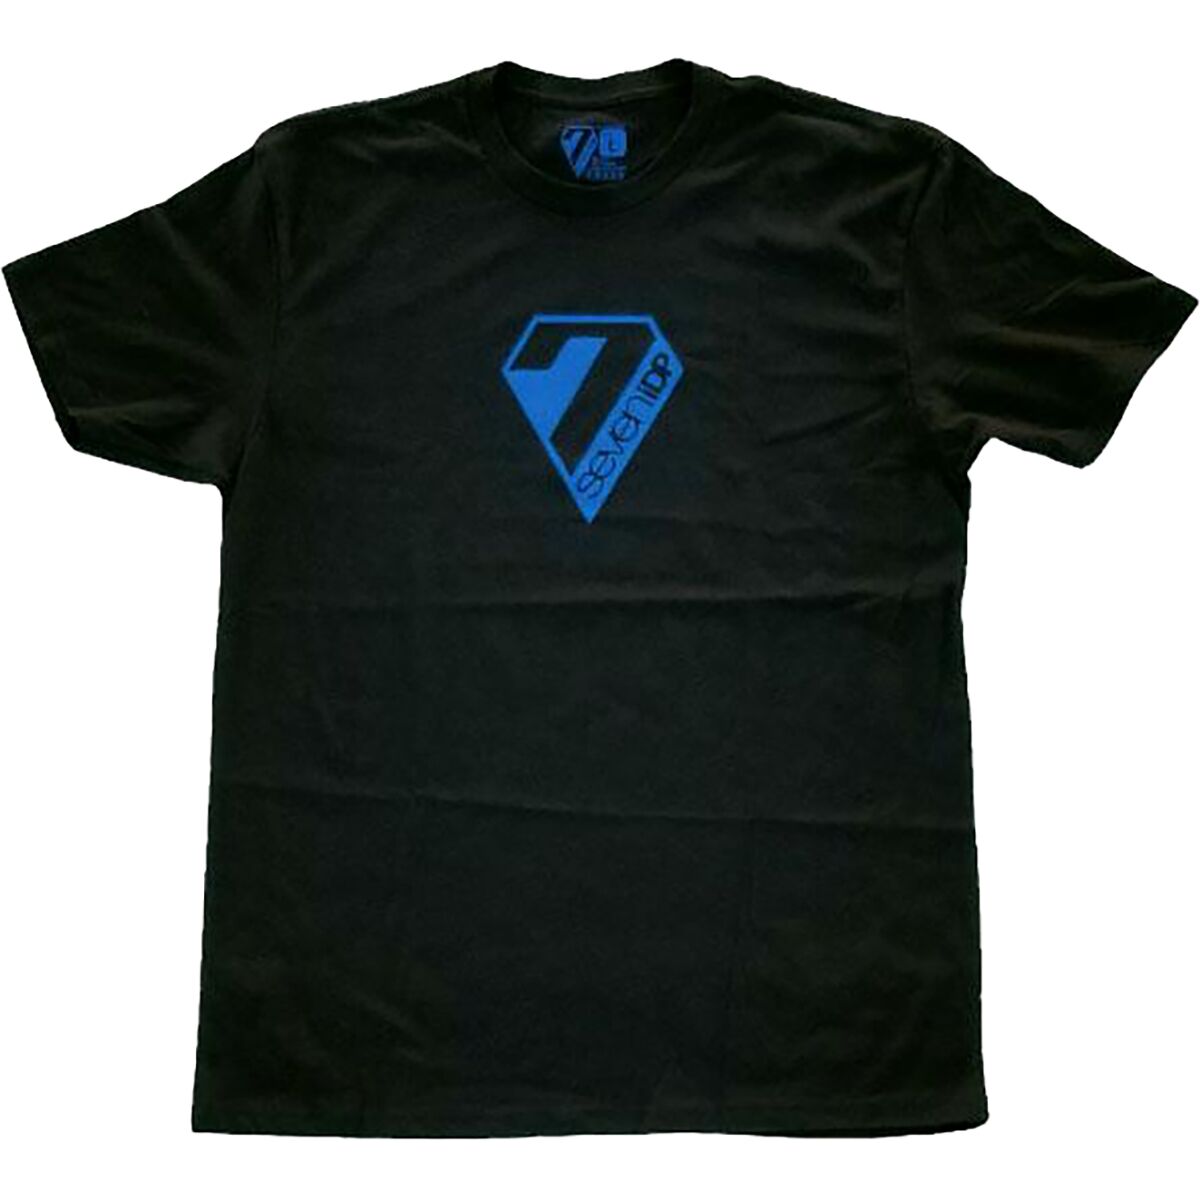 7 Protection 7iDP Logo T-Shirt - Men's